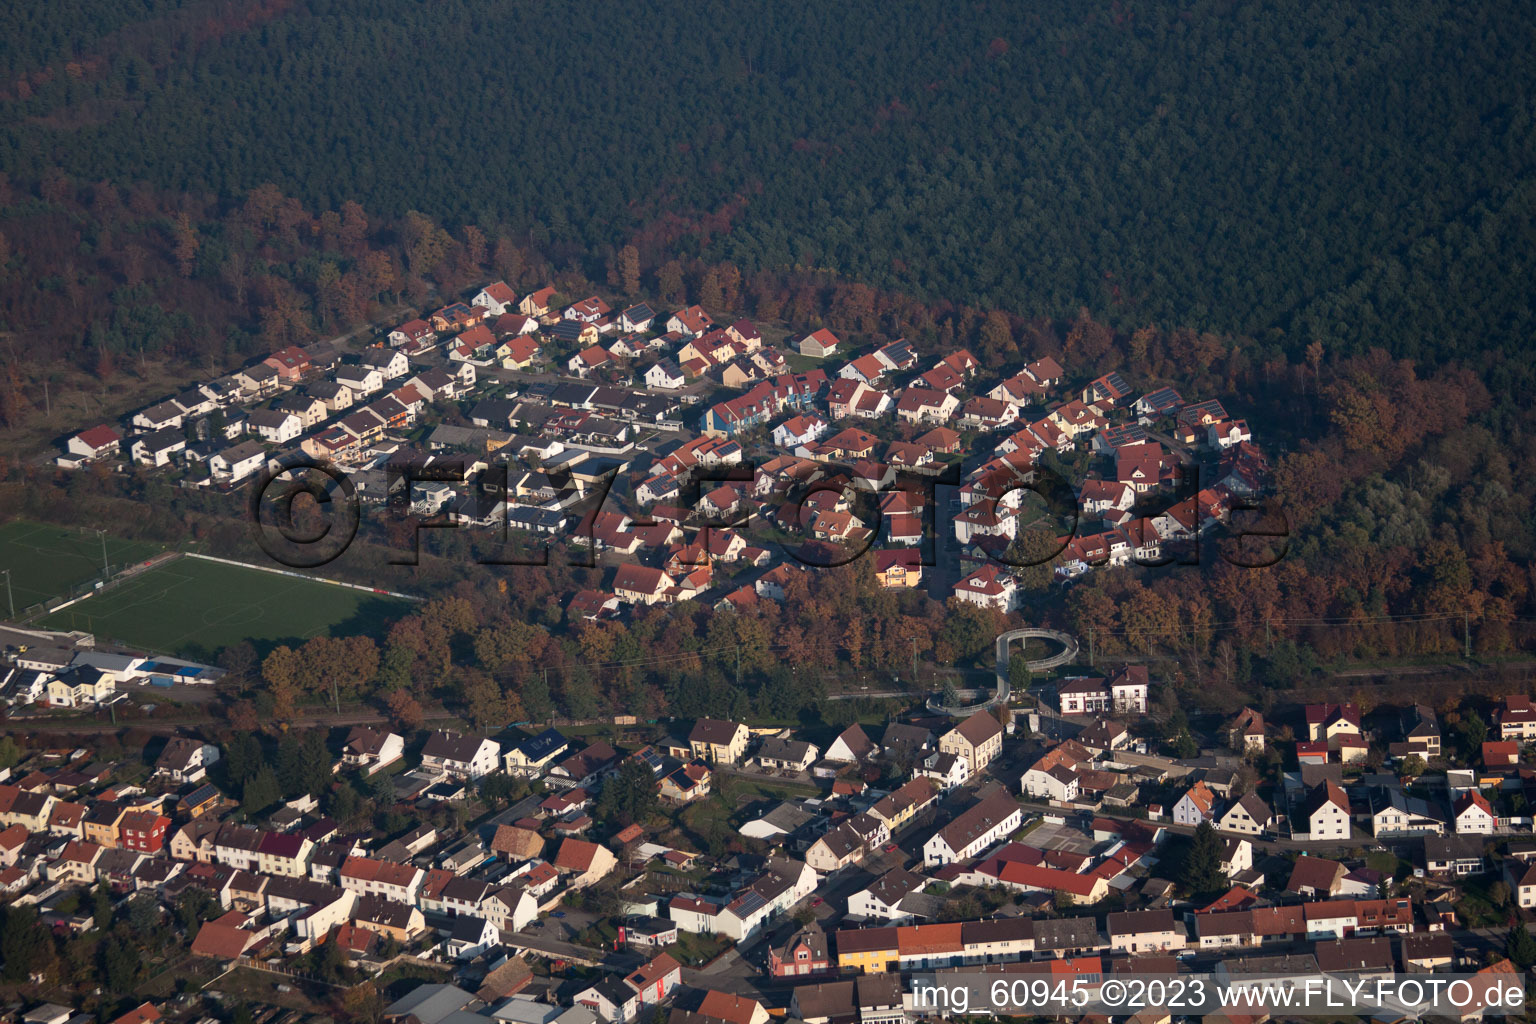 Quartier Huttenheim in Philippsburg dans le département Bade-Wurtemberg, Allemagne vue du ciel